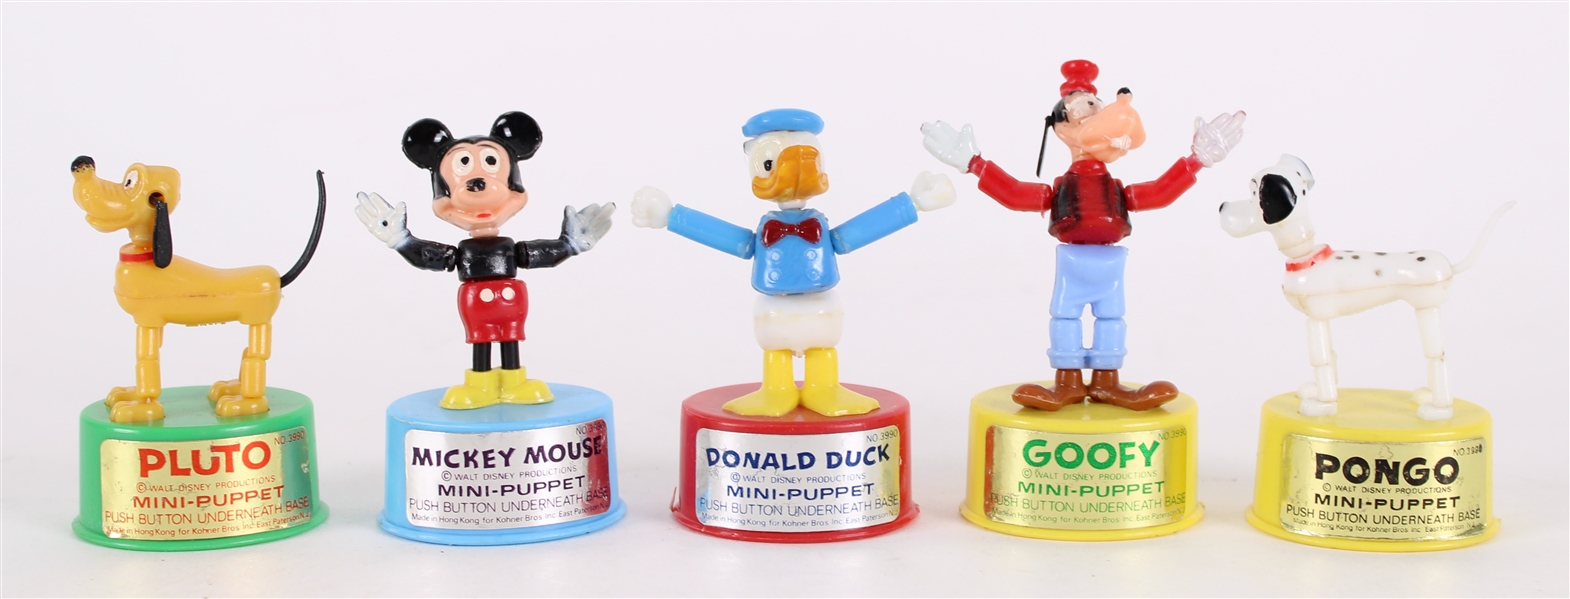 1967 Walt Disney Mini Puppets by Kohner Bros - Lot of 5 w/ Mickey, Goofy, Pluto, Donald Duck & Pongo